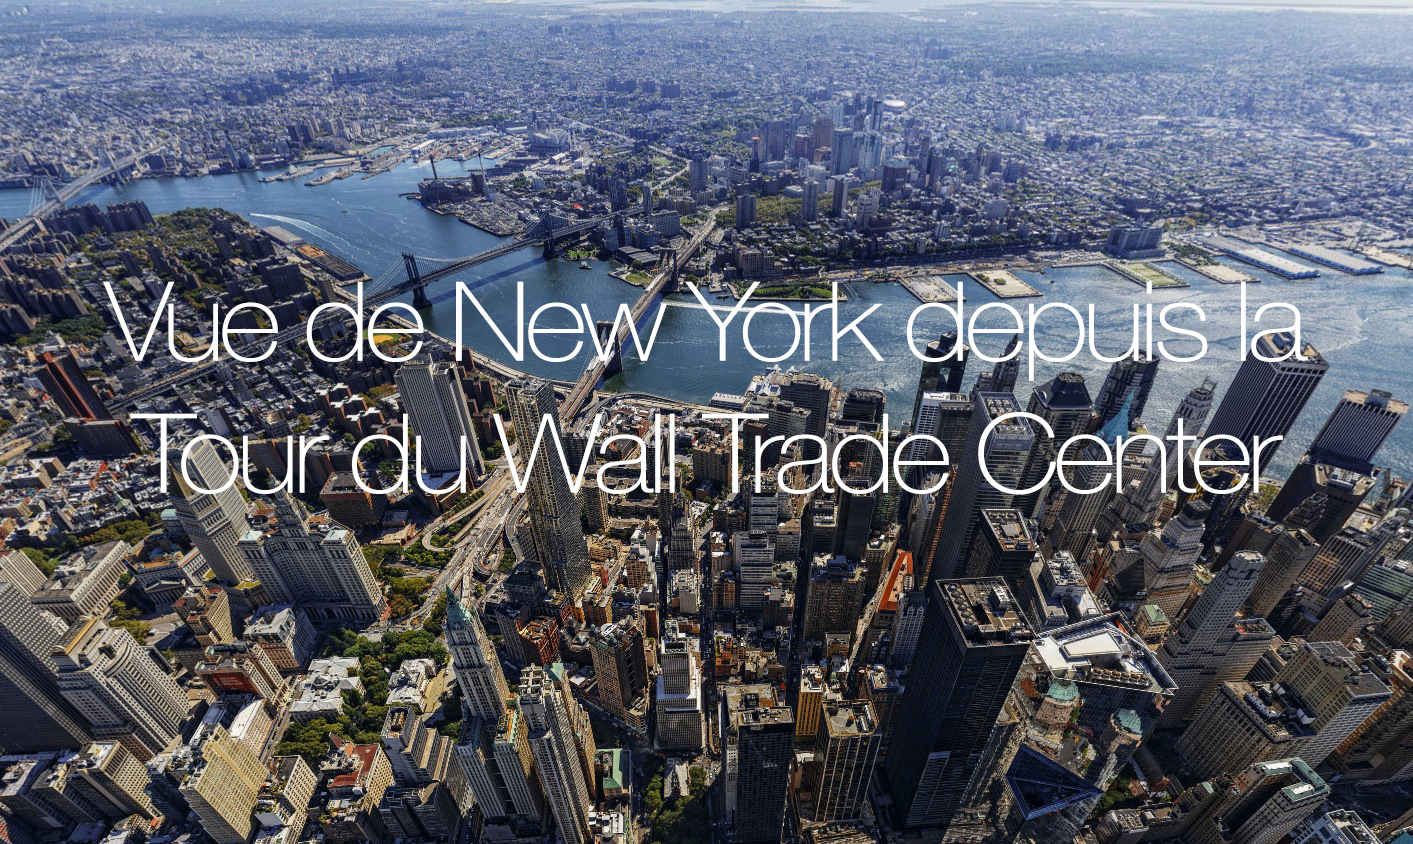 Vue New York 1 Wall Trade Center